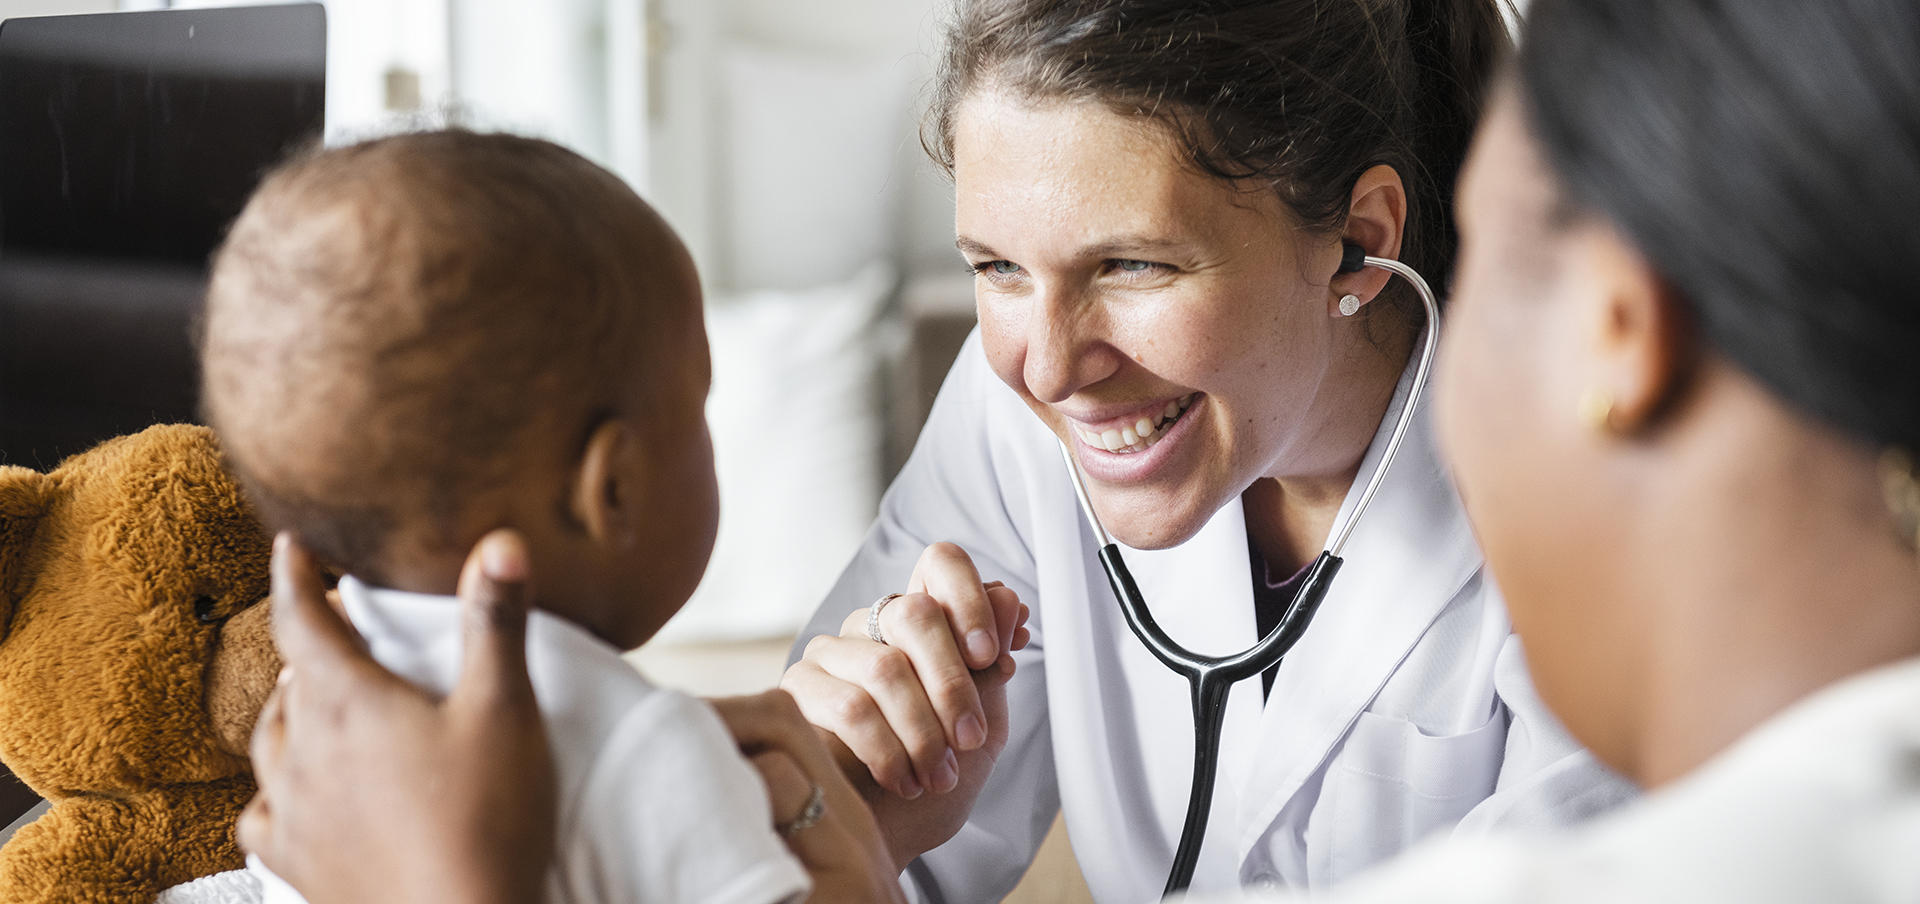 White Doctor smiling at black infant 